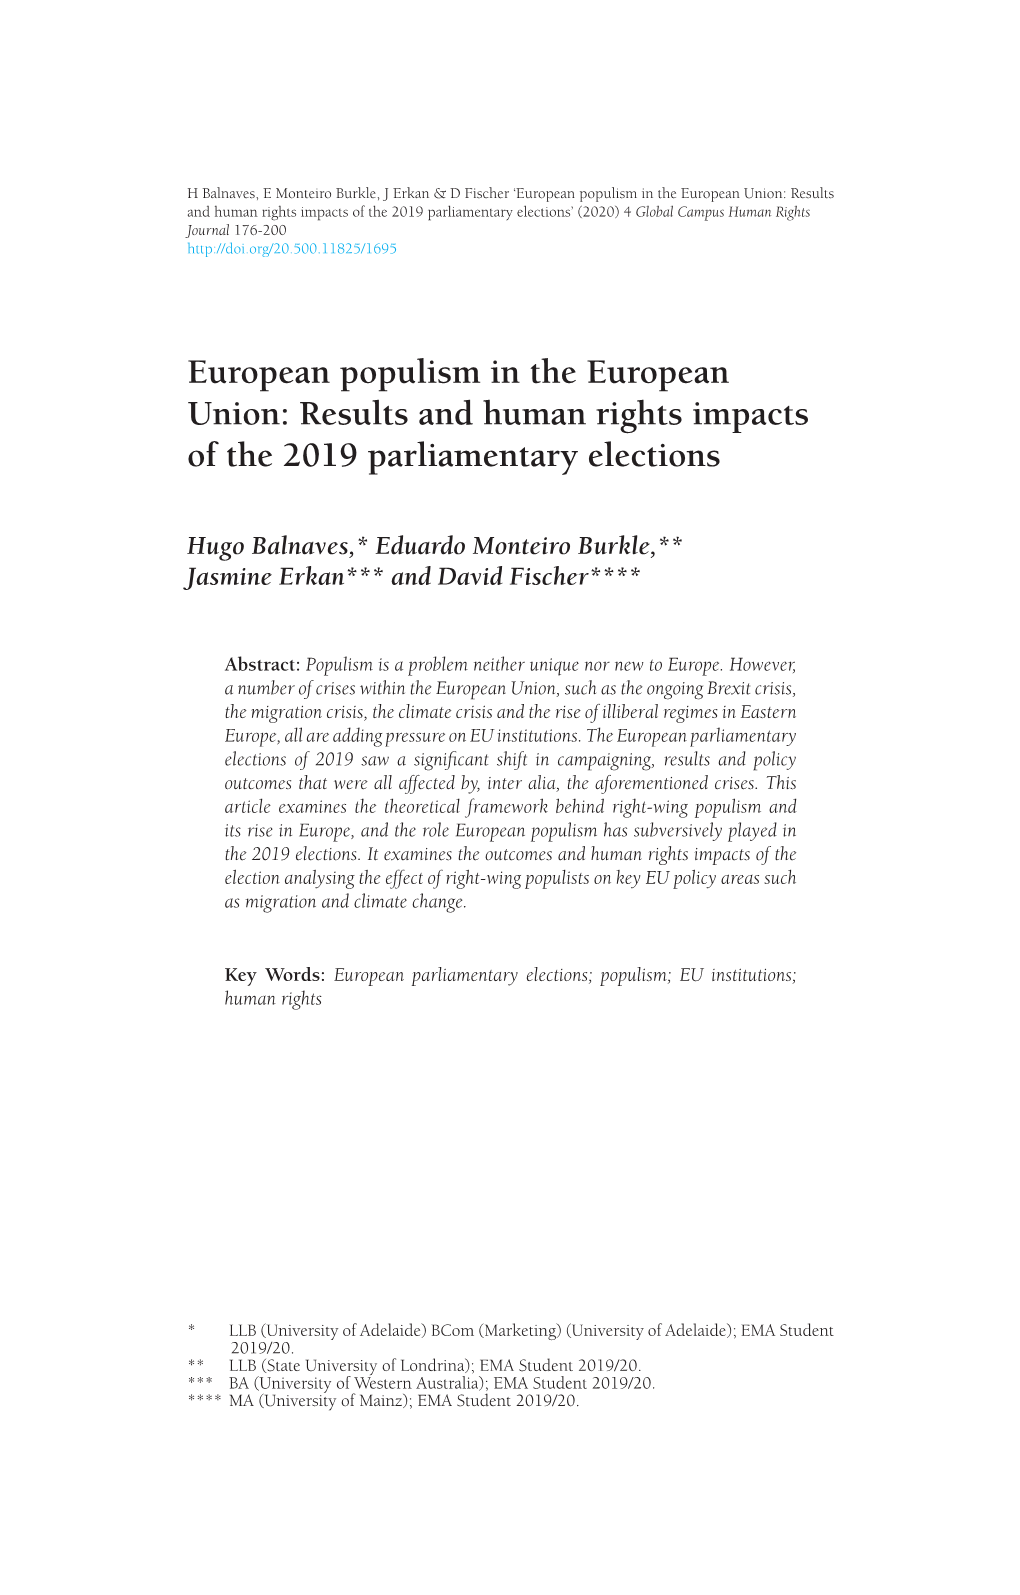 European Populism in the European Union